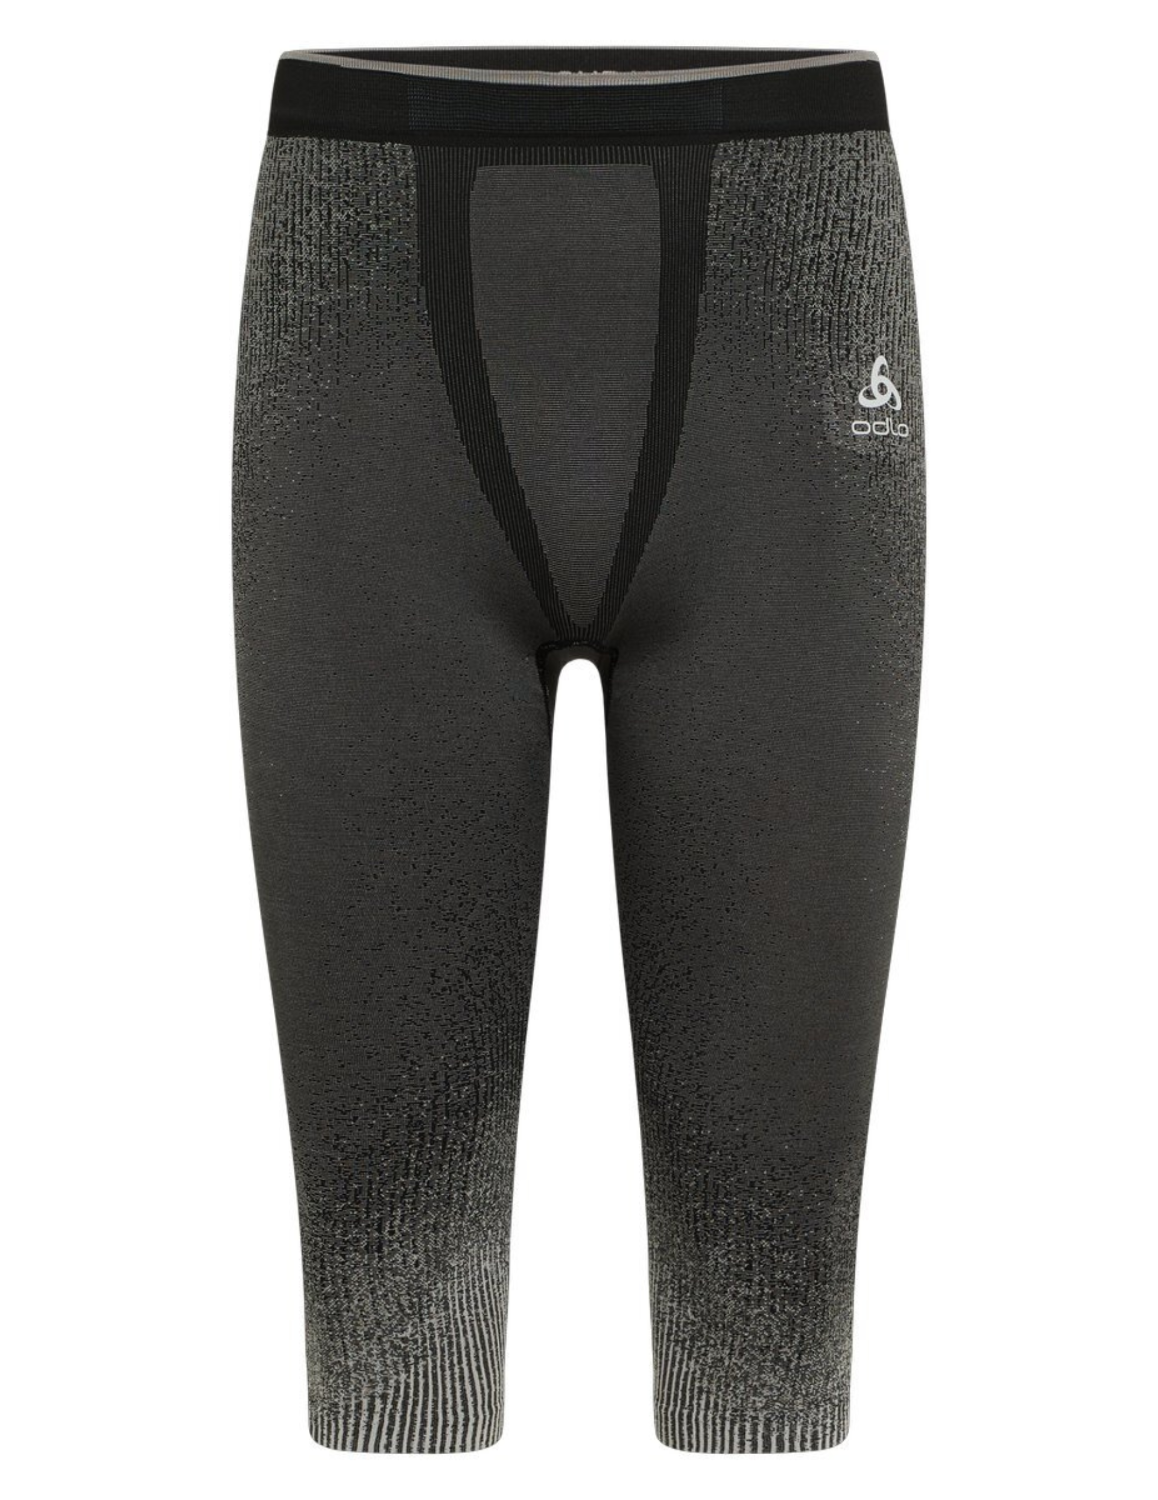 Sous-pantalon Odlo Performance Warm Blackcomb 3/4 Homme